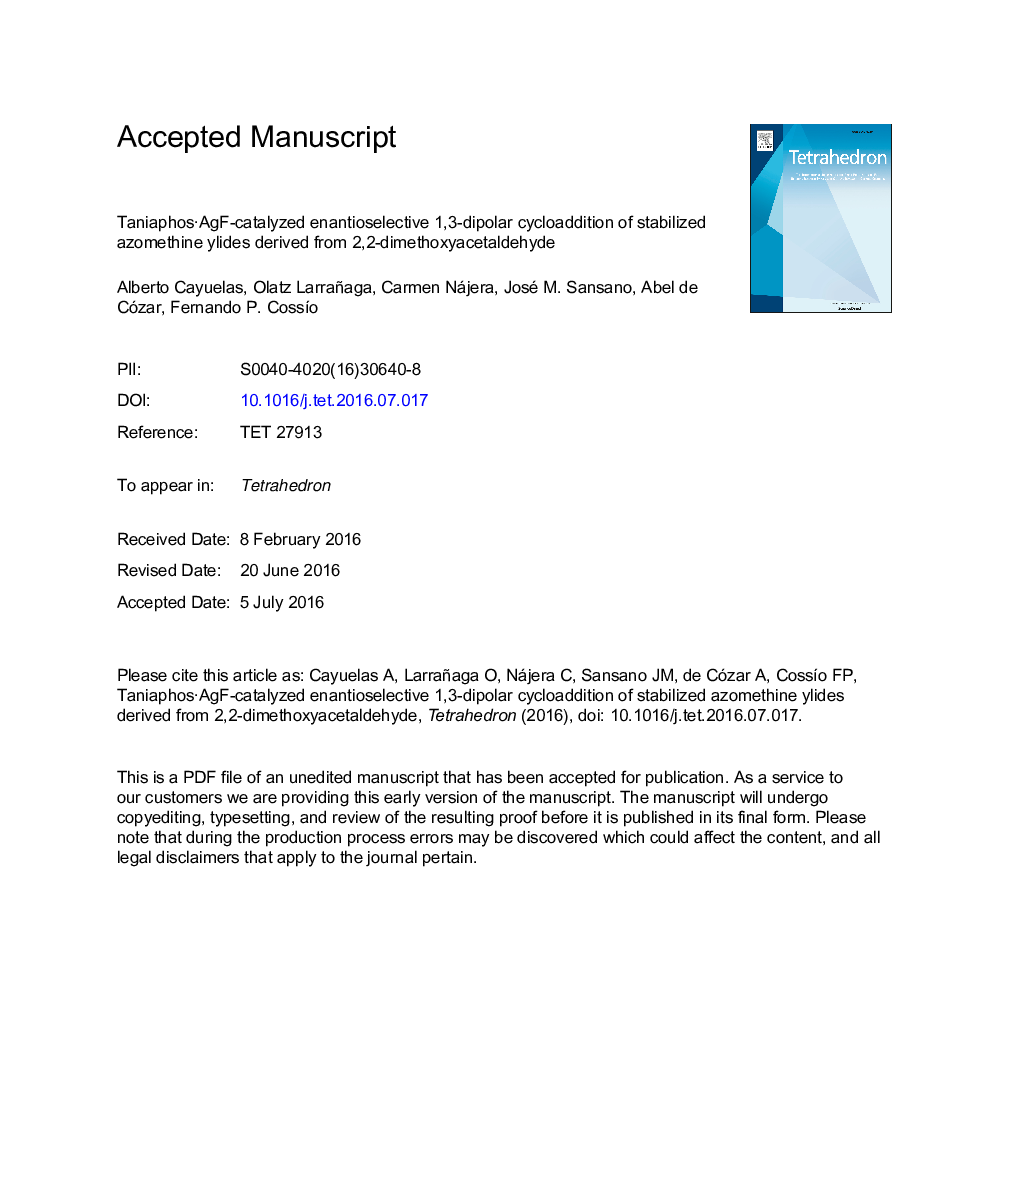 TaniaphosÂ·AgF-catalyzed enantioselective 1,3-dipolar cycloaddition of stabilized azomethine ylides derived from 2,2-dimethoxyacetaldehyde